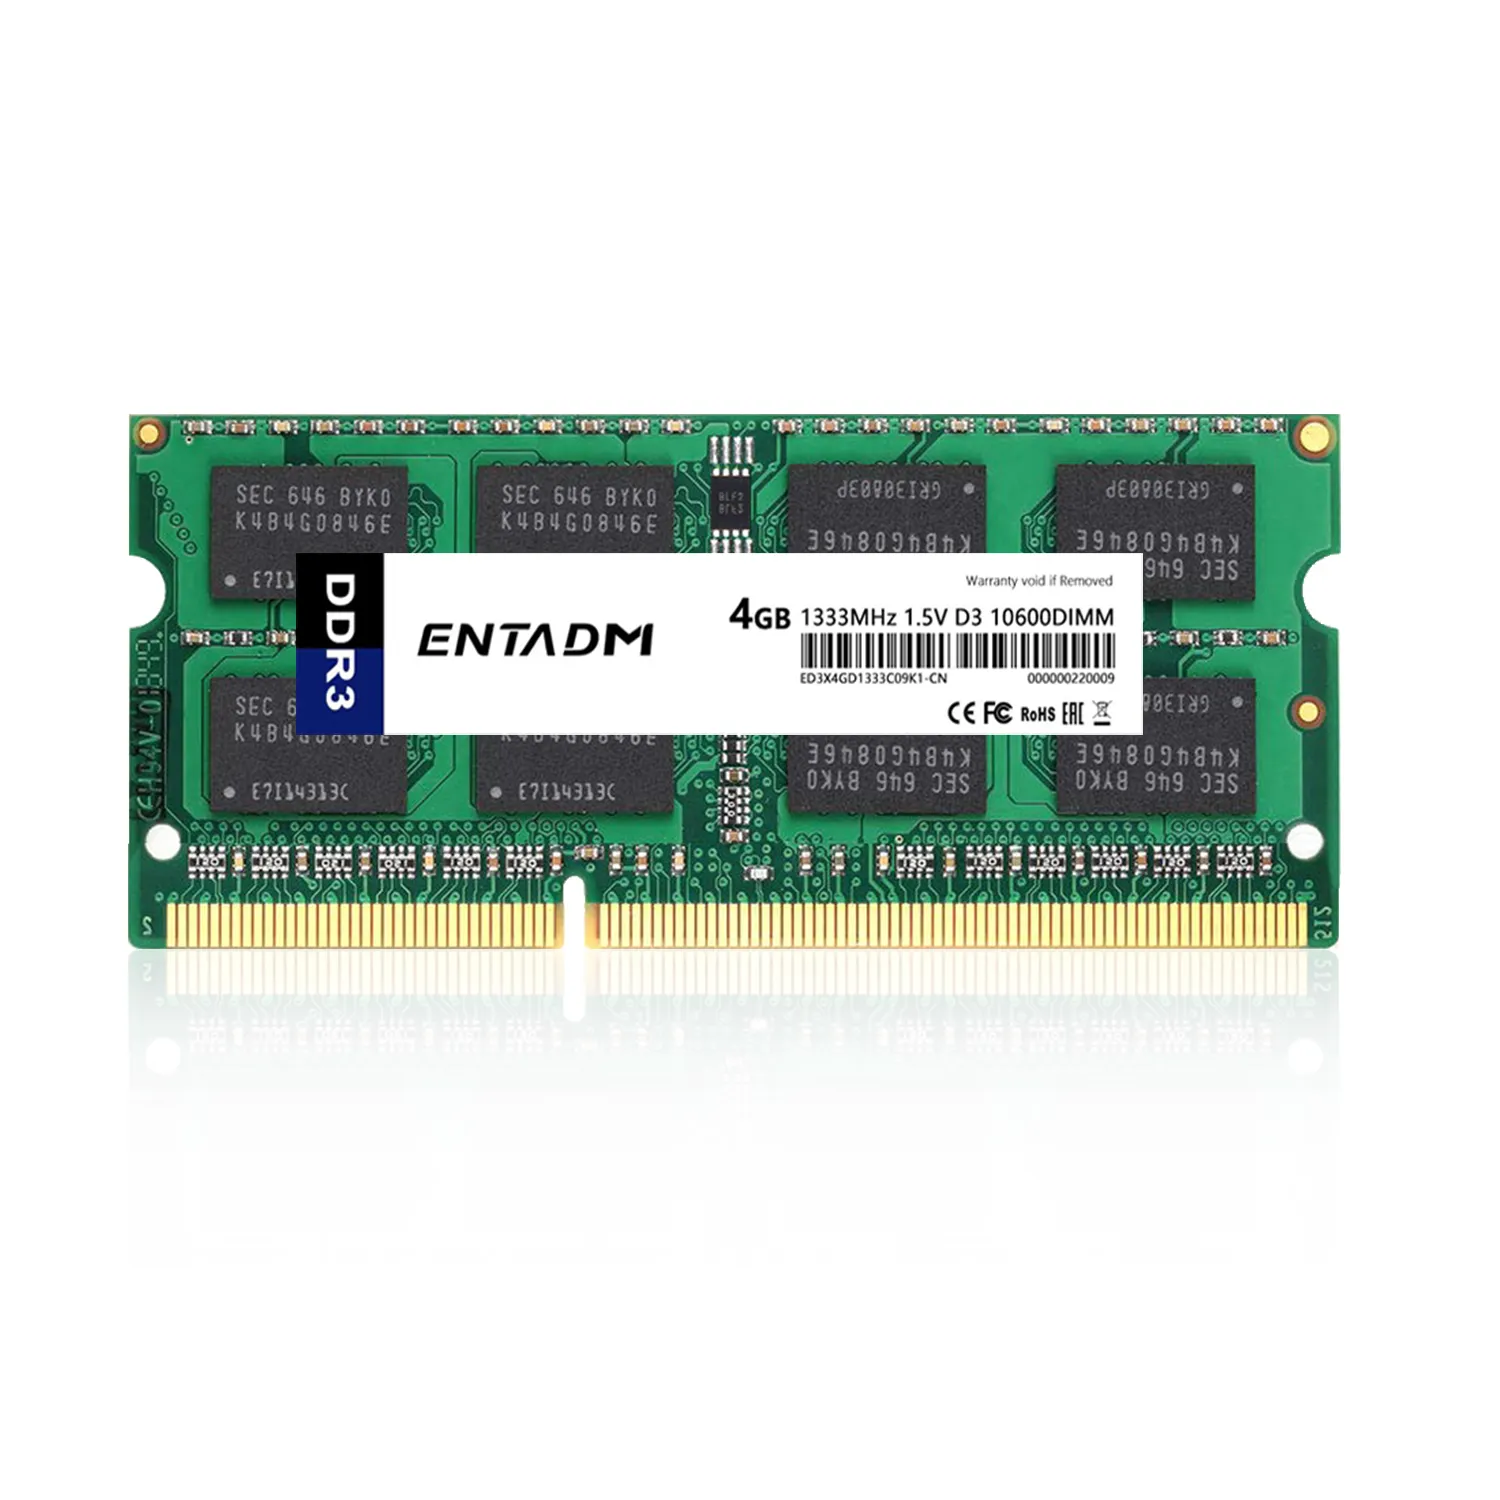 Latest OEM Best Quality PC 1.5V 1600MHZ 1333MHZ DDR3 4GB Laptops Memory Card RAM PC